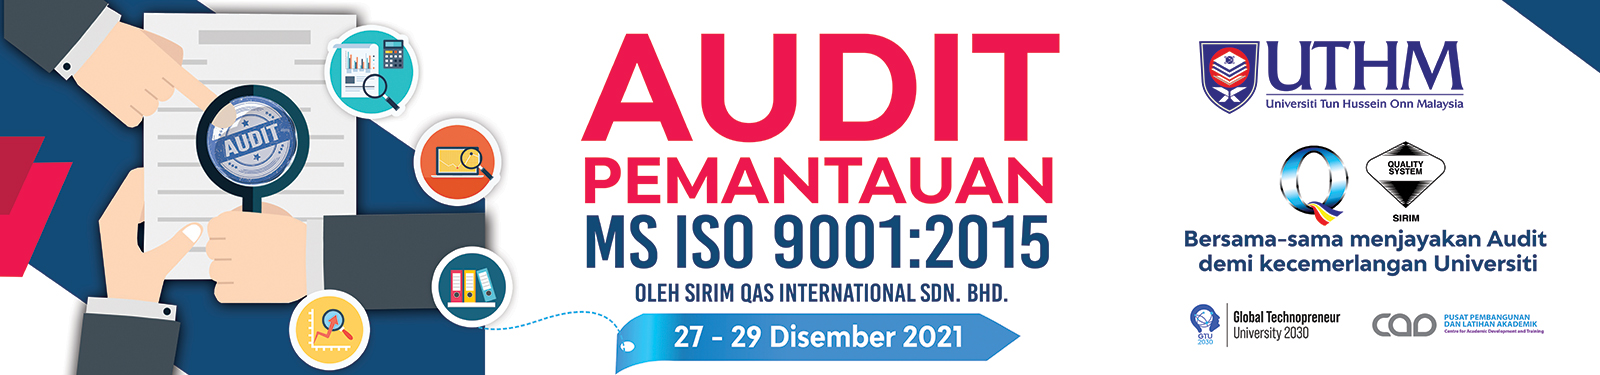 Banner audit SIRIM terkini